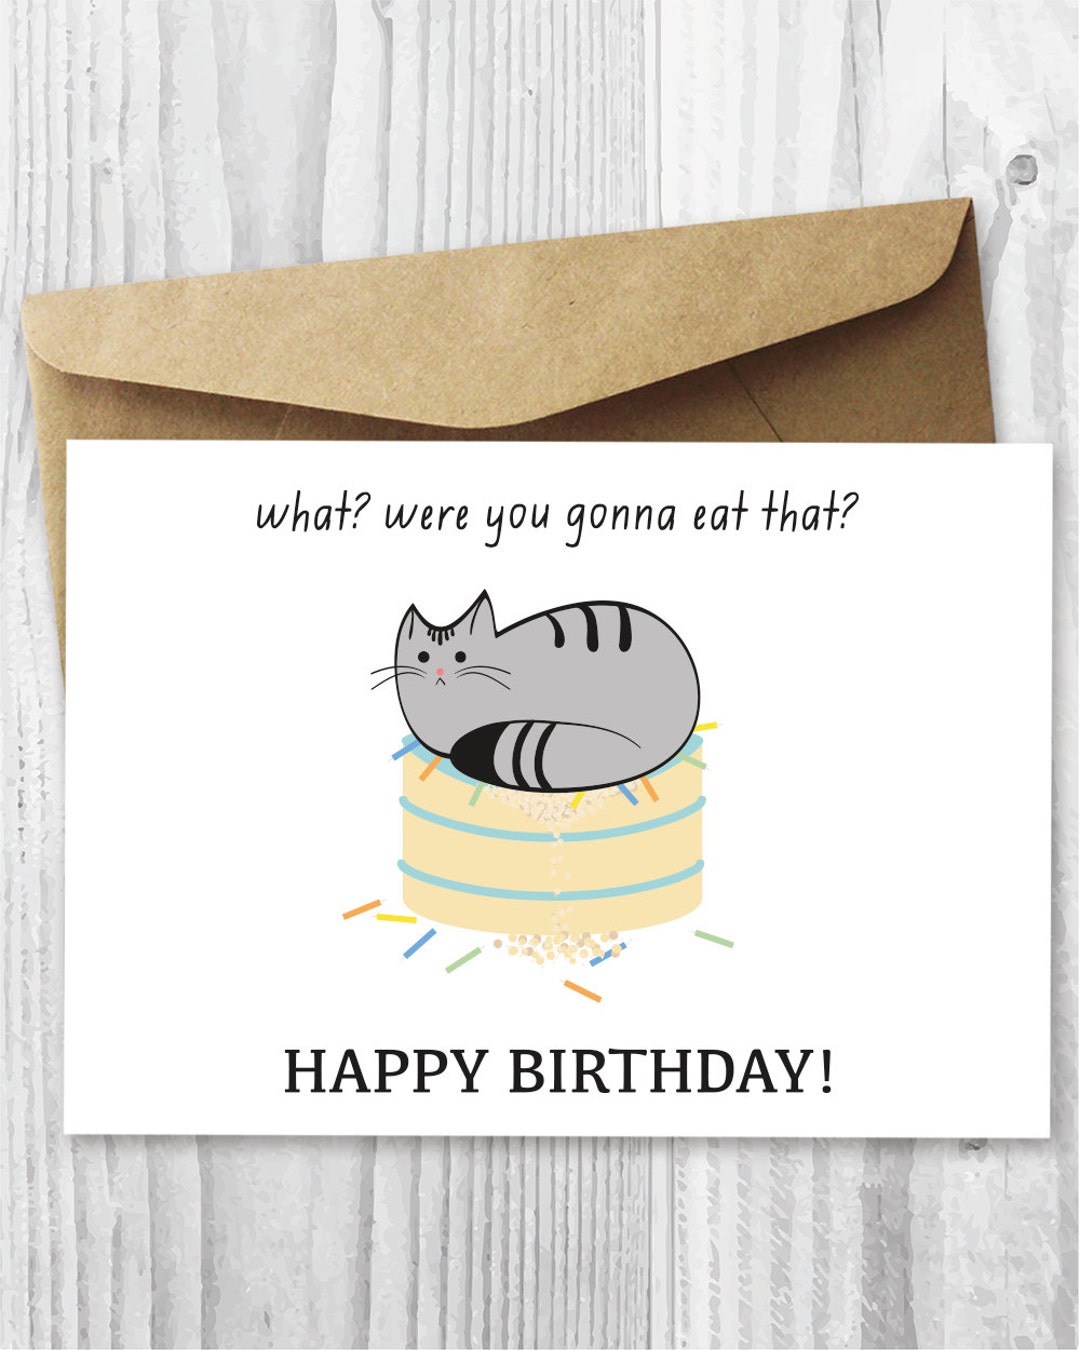 happy birthday cat funny